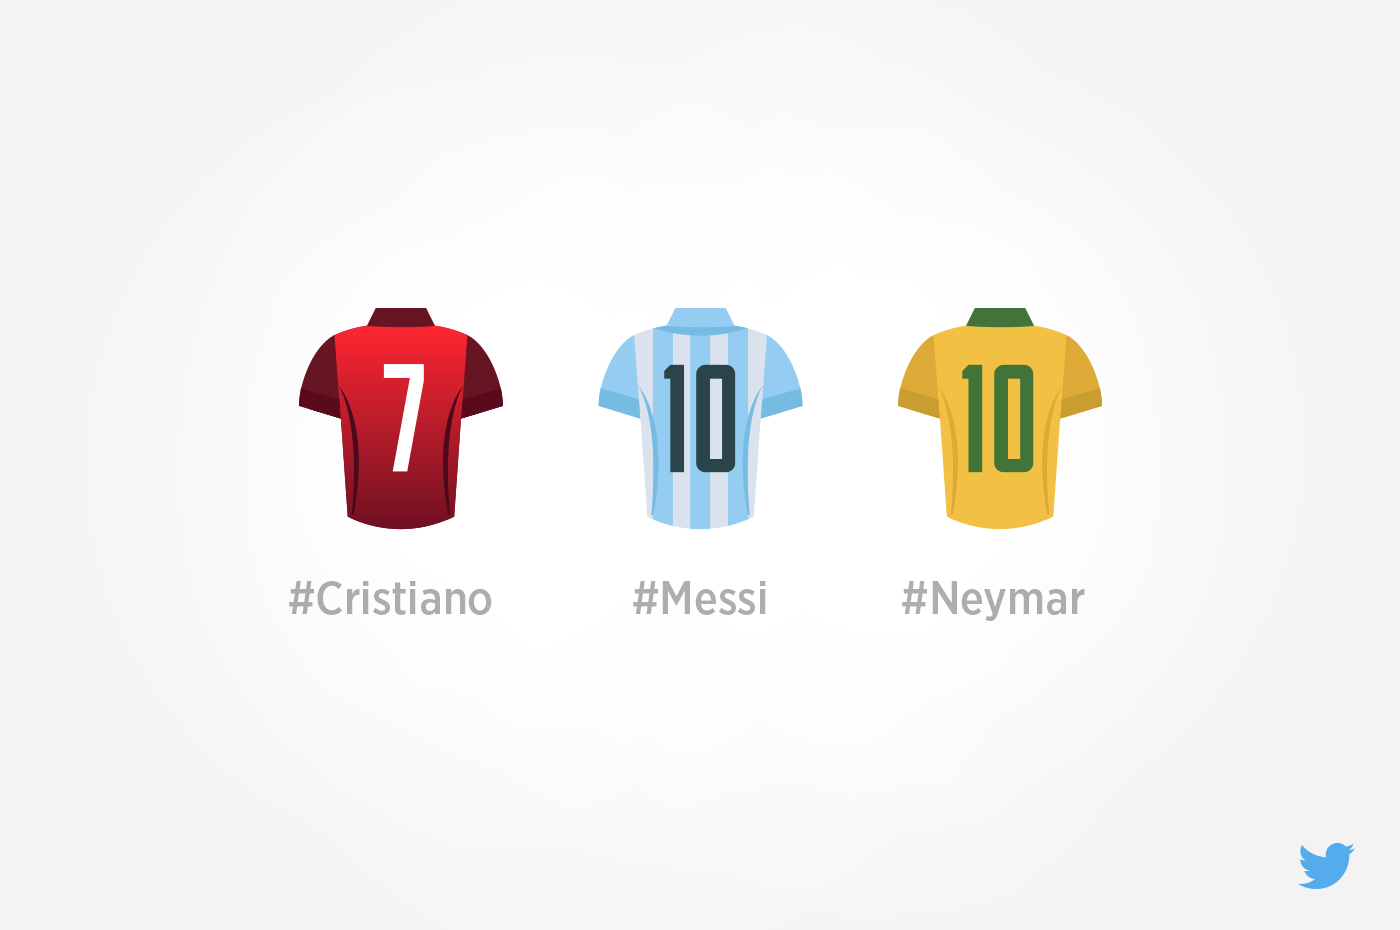 émojis Twitter fifa ballon d'or 2015 cristiano ronaldo Messi Neymar